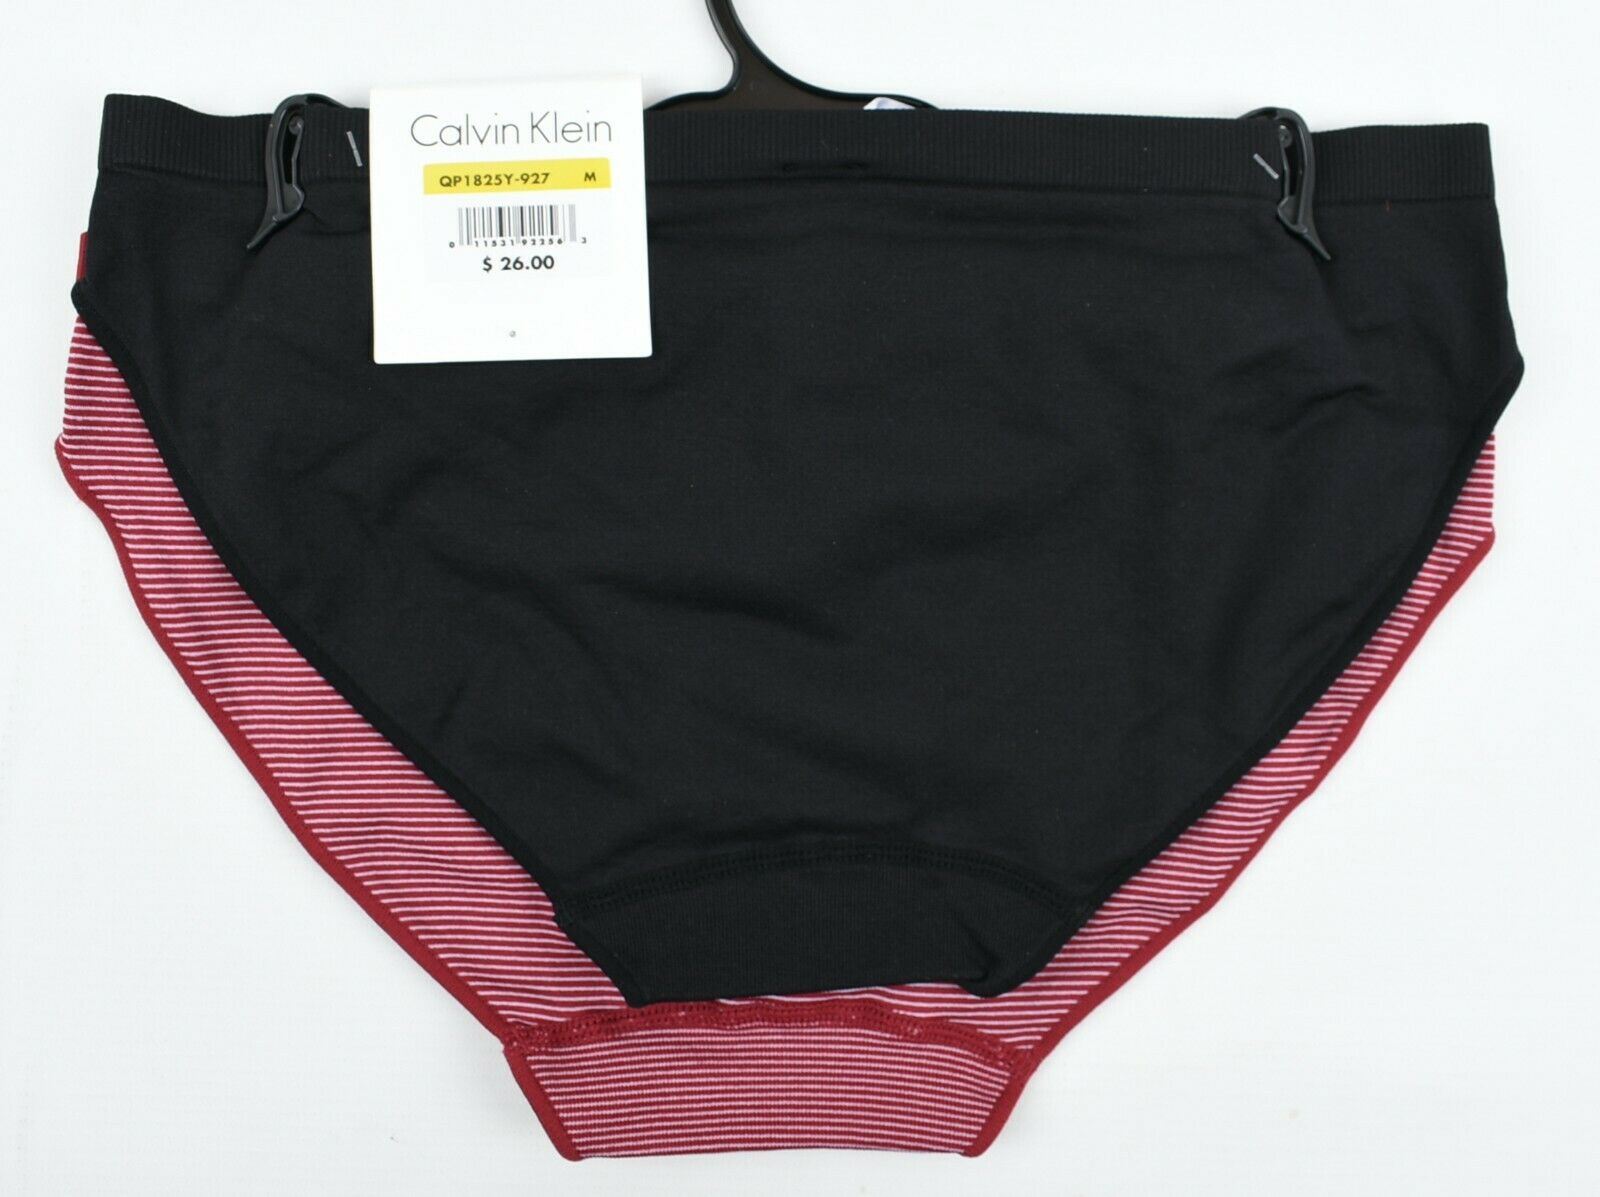 CALVIN KLEIN Women's CHEEKY BIKINI 2-pack Bikini Briefs, Knickers, size M